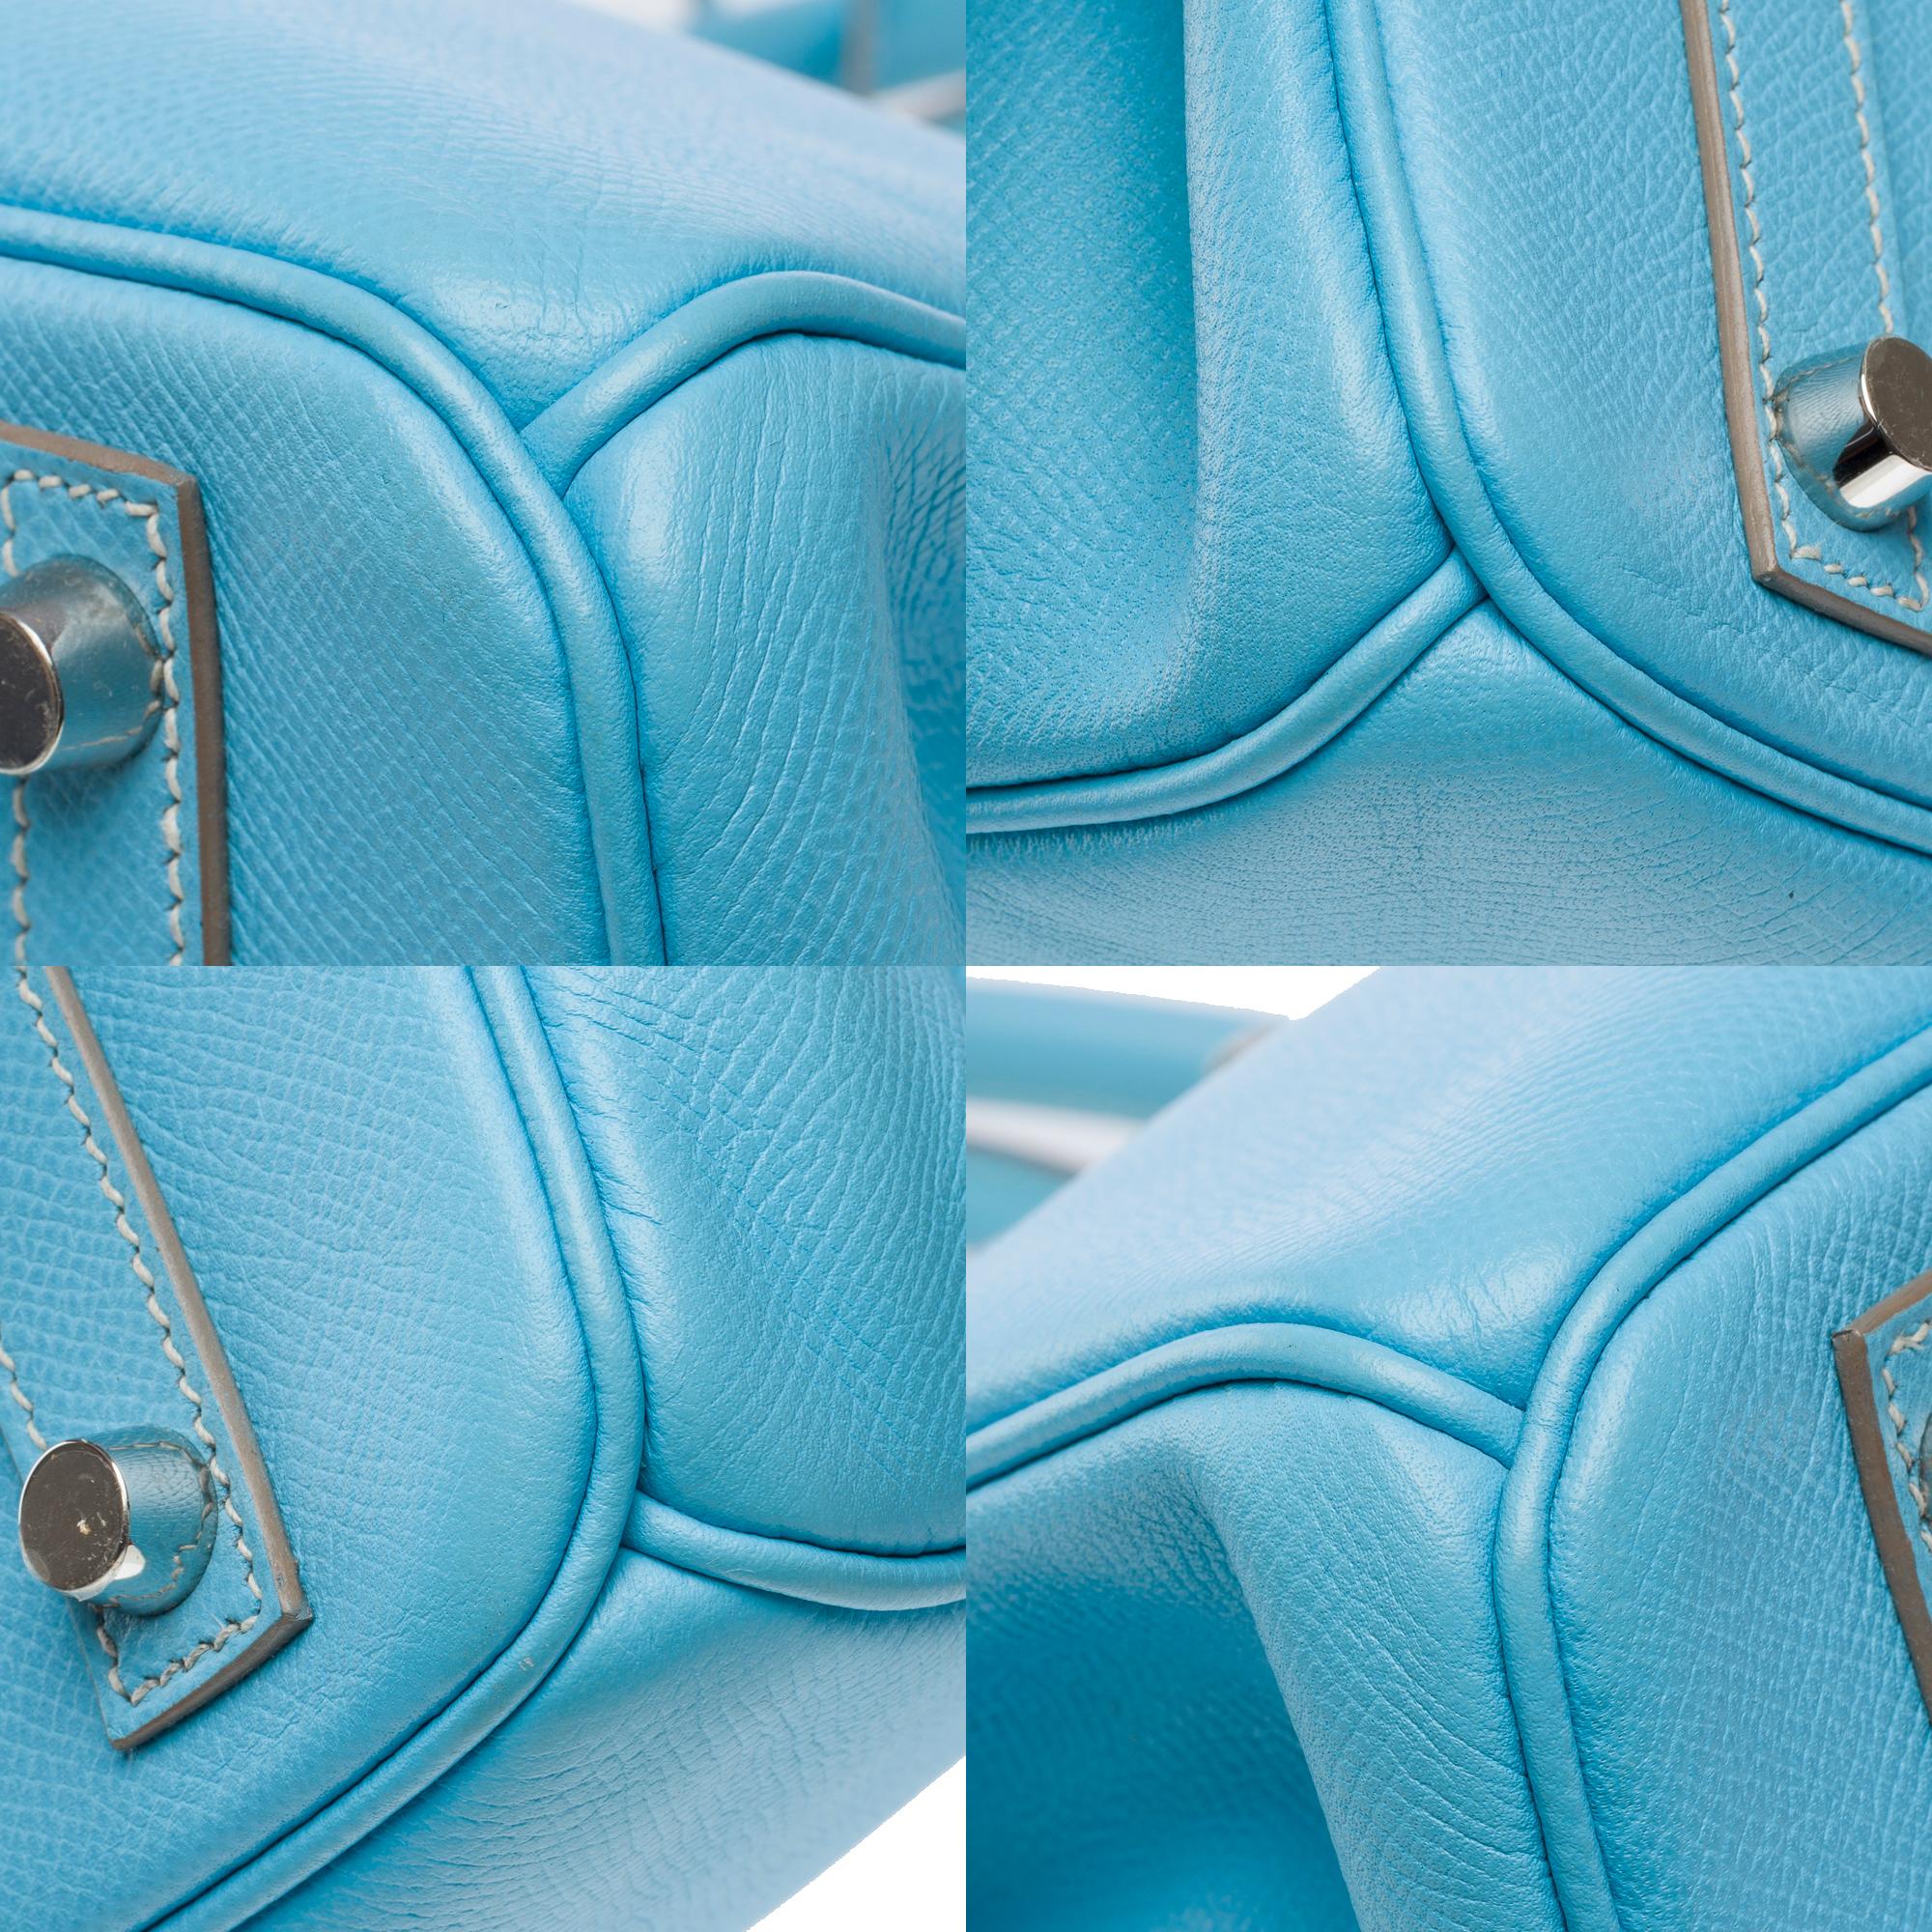 Rare Hermes Birkin 30 Candy Edition handbag in Celeste Blue Epsom leather, SHW 9